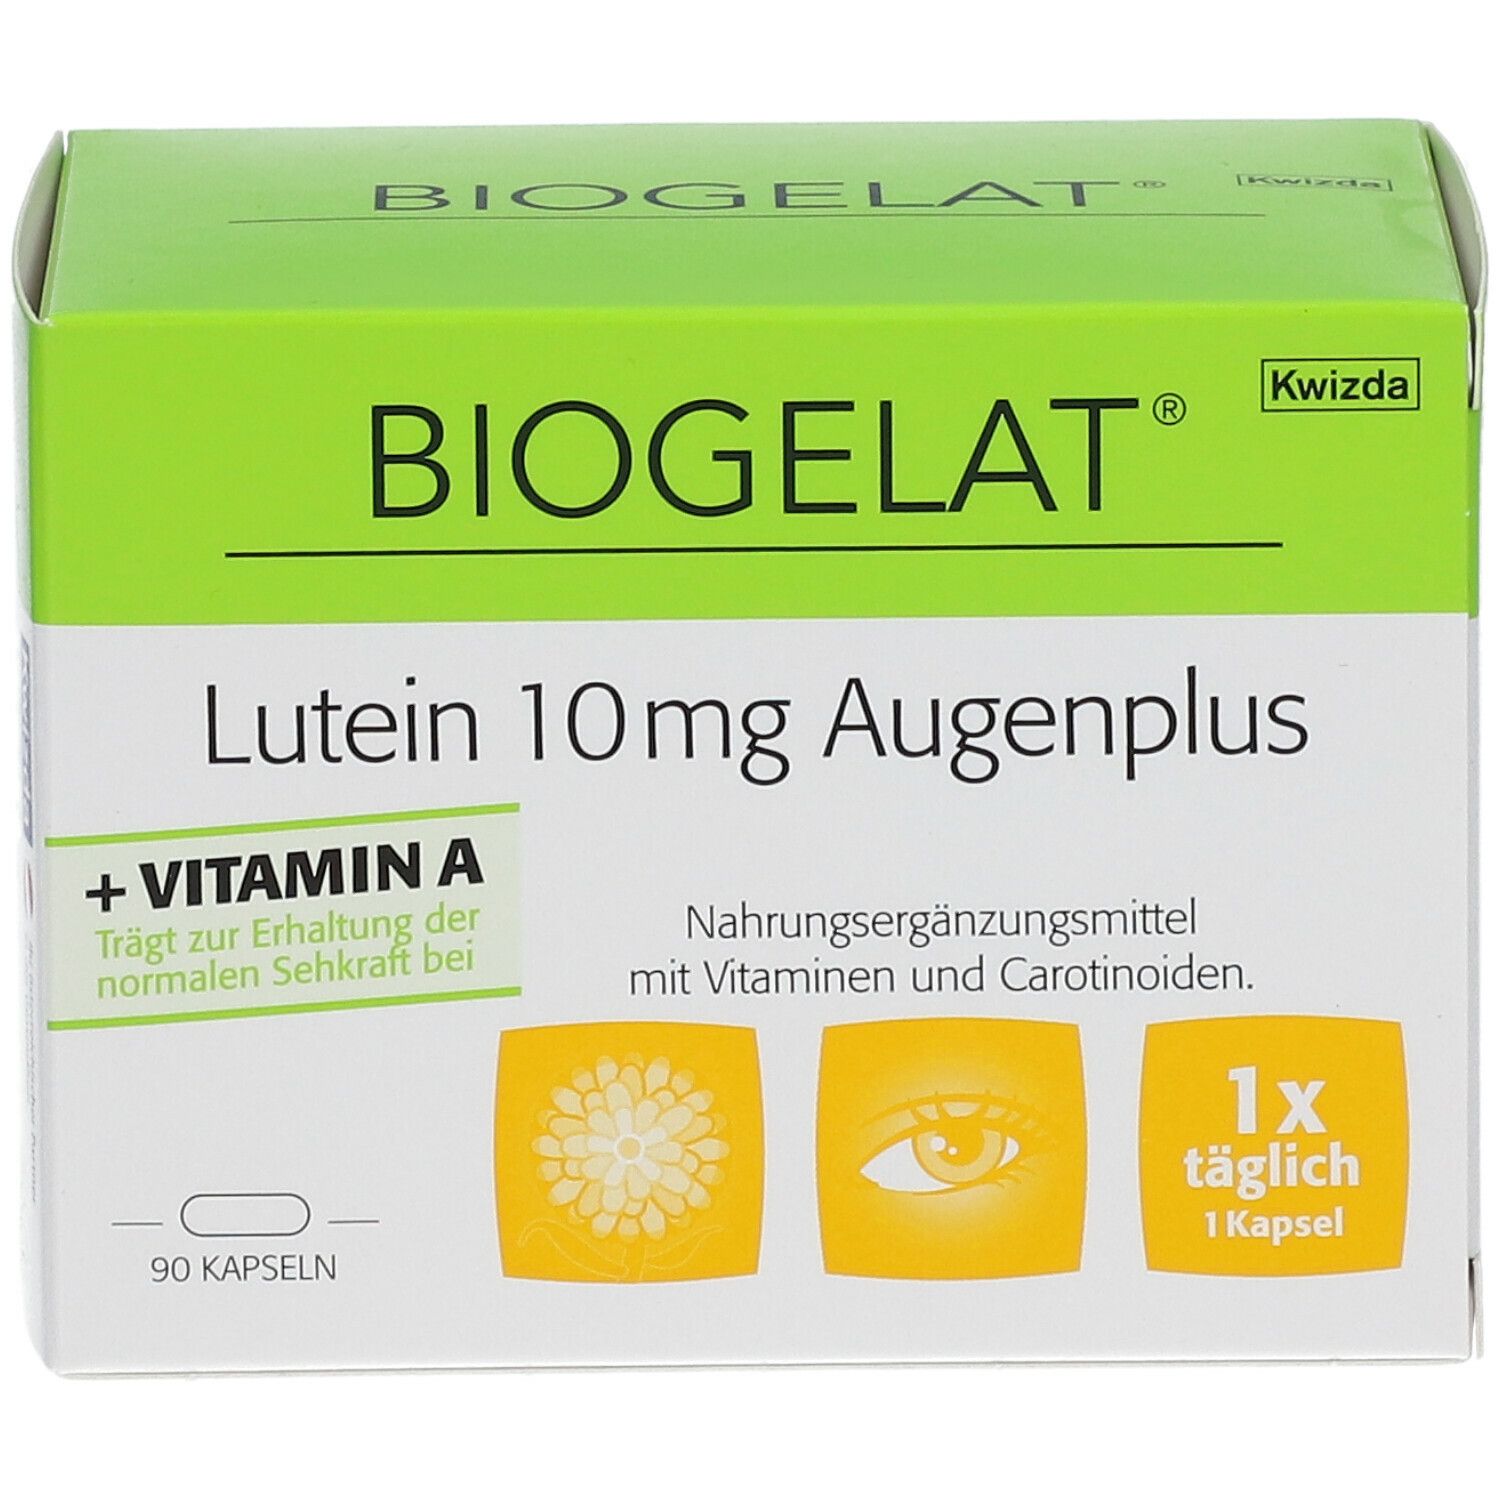 BIOGELAT® 10 mg Augenplus